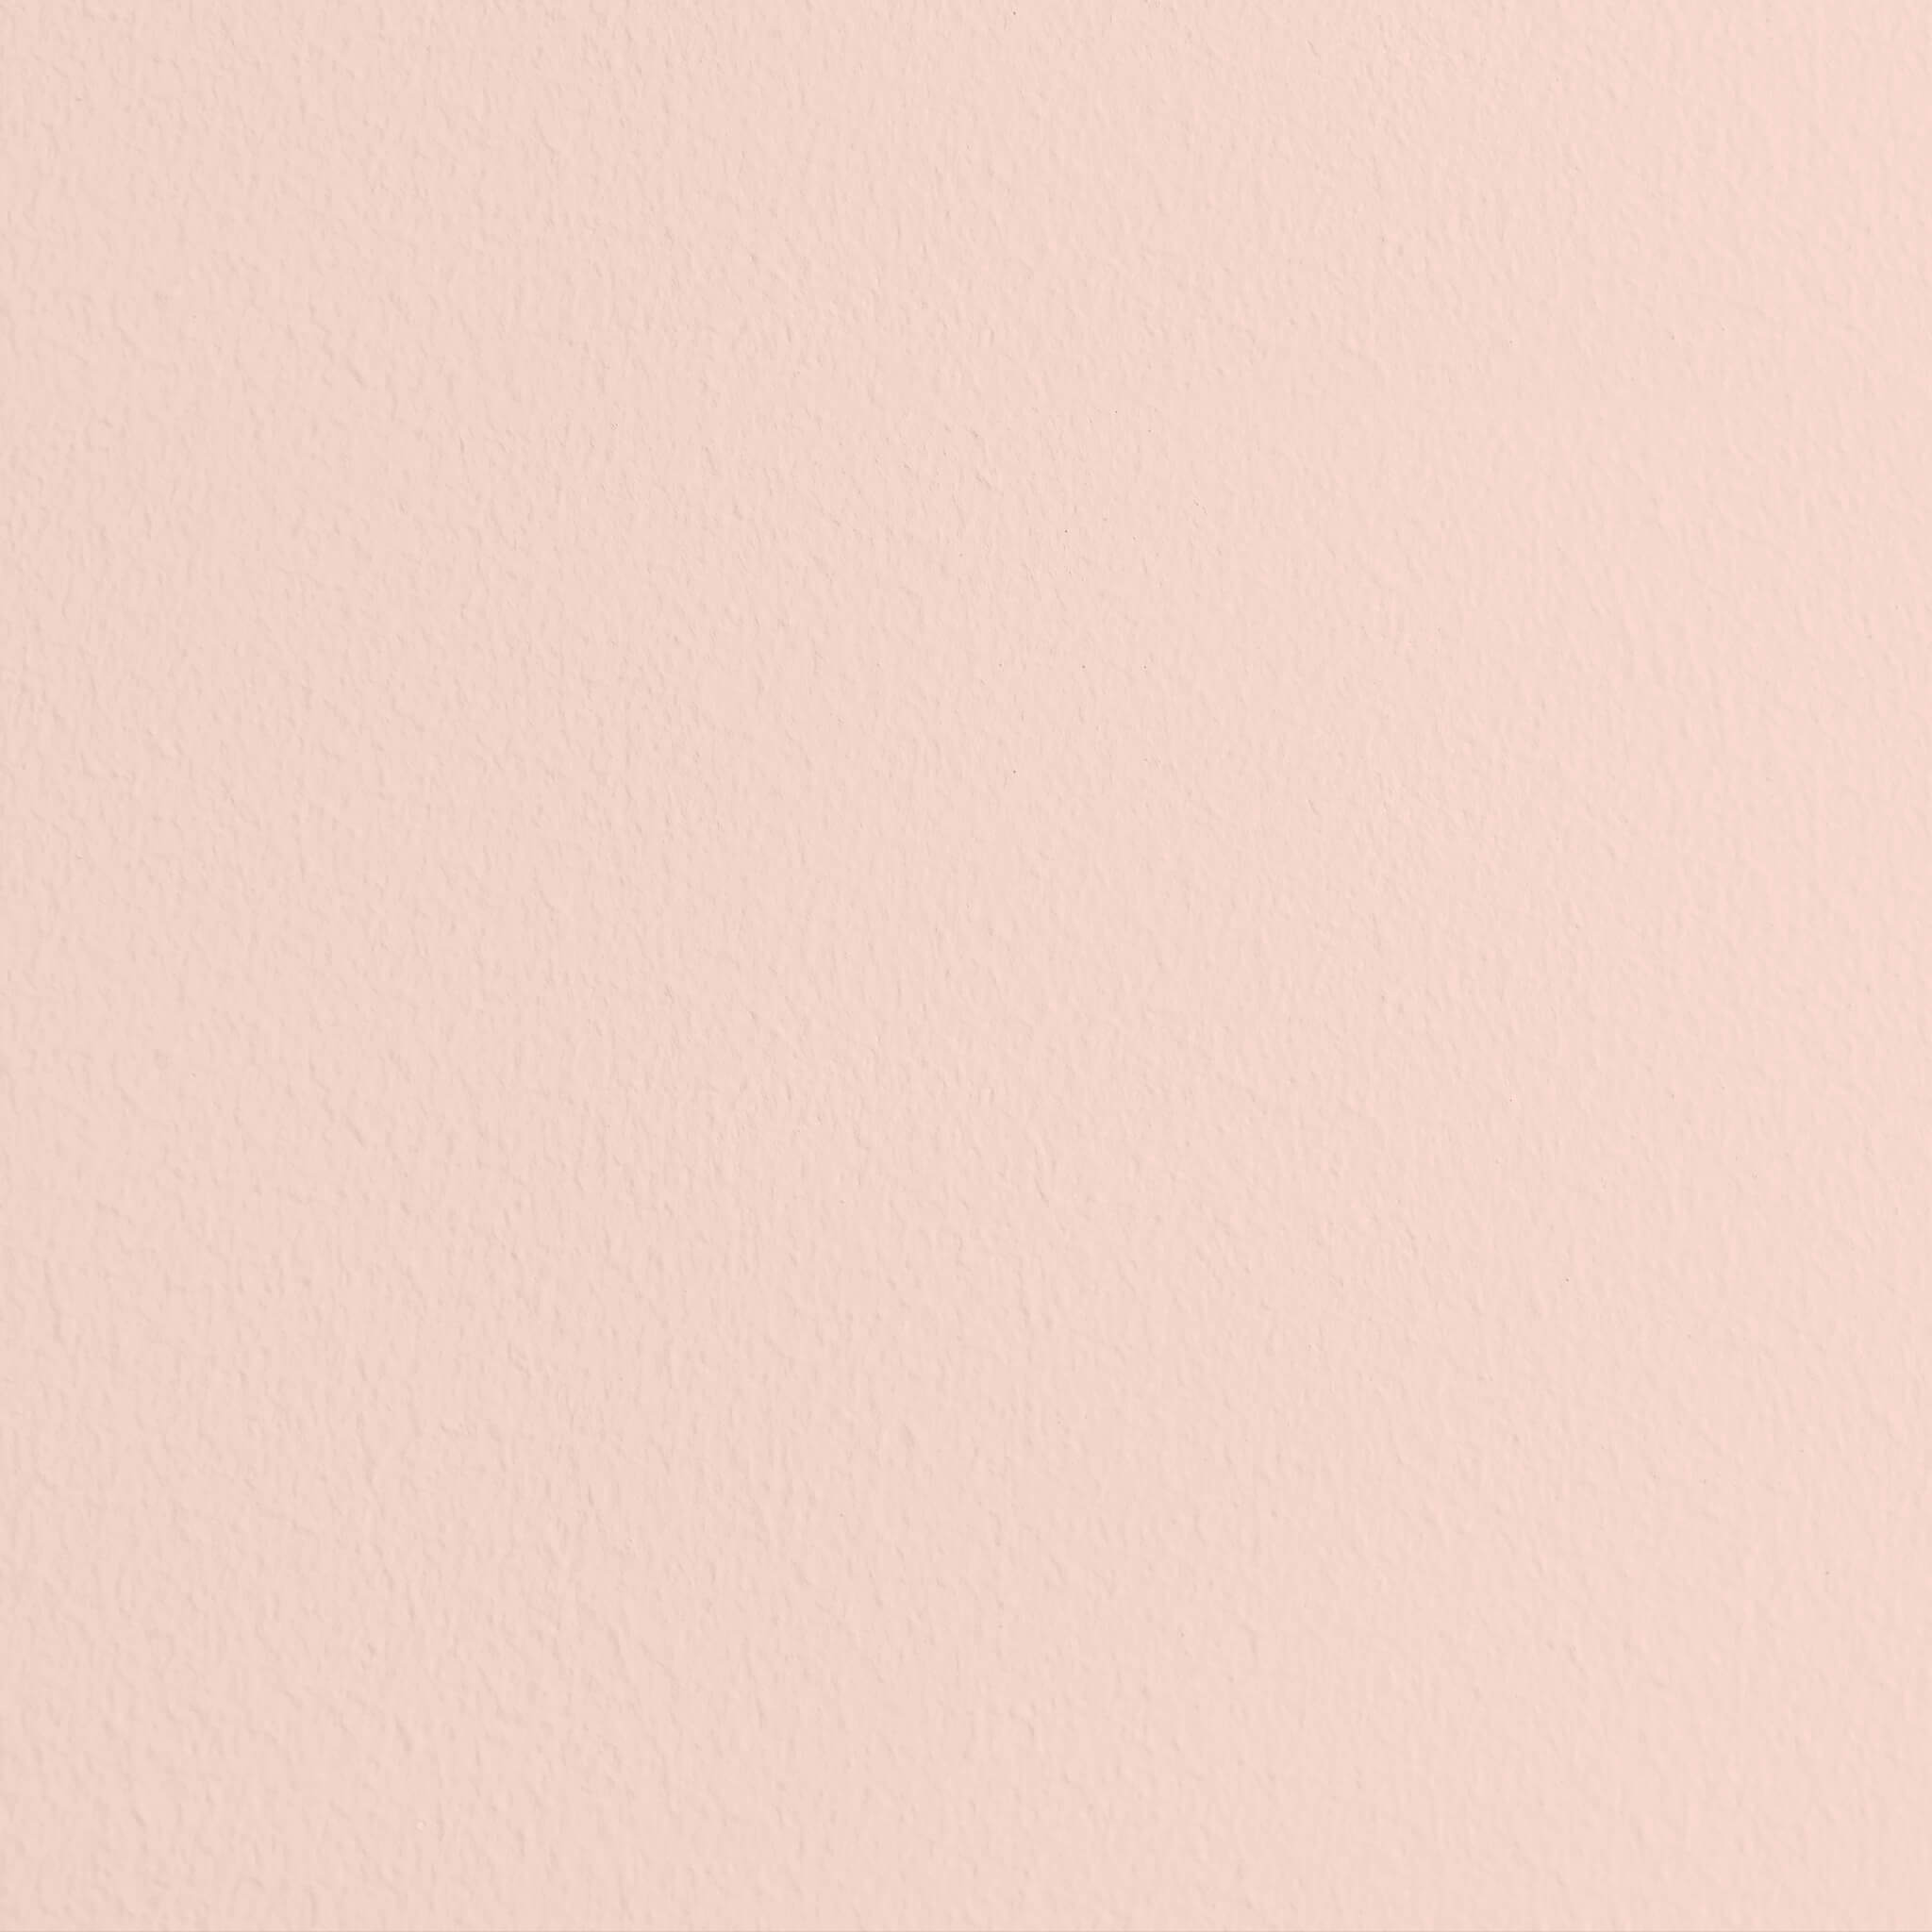 Mylands Palmerston Pink No. 243 - Marble Matt Emulsion / Wandfarbe, 2.5L